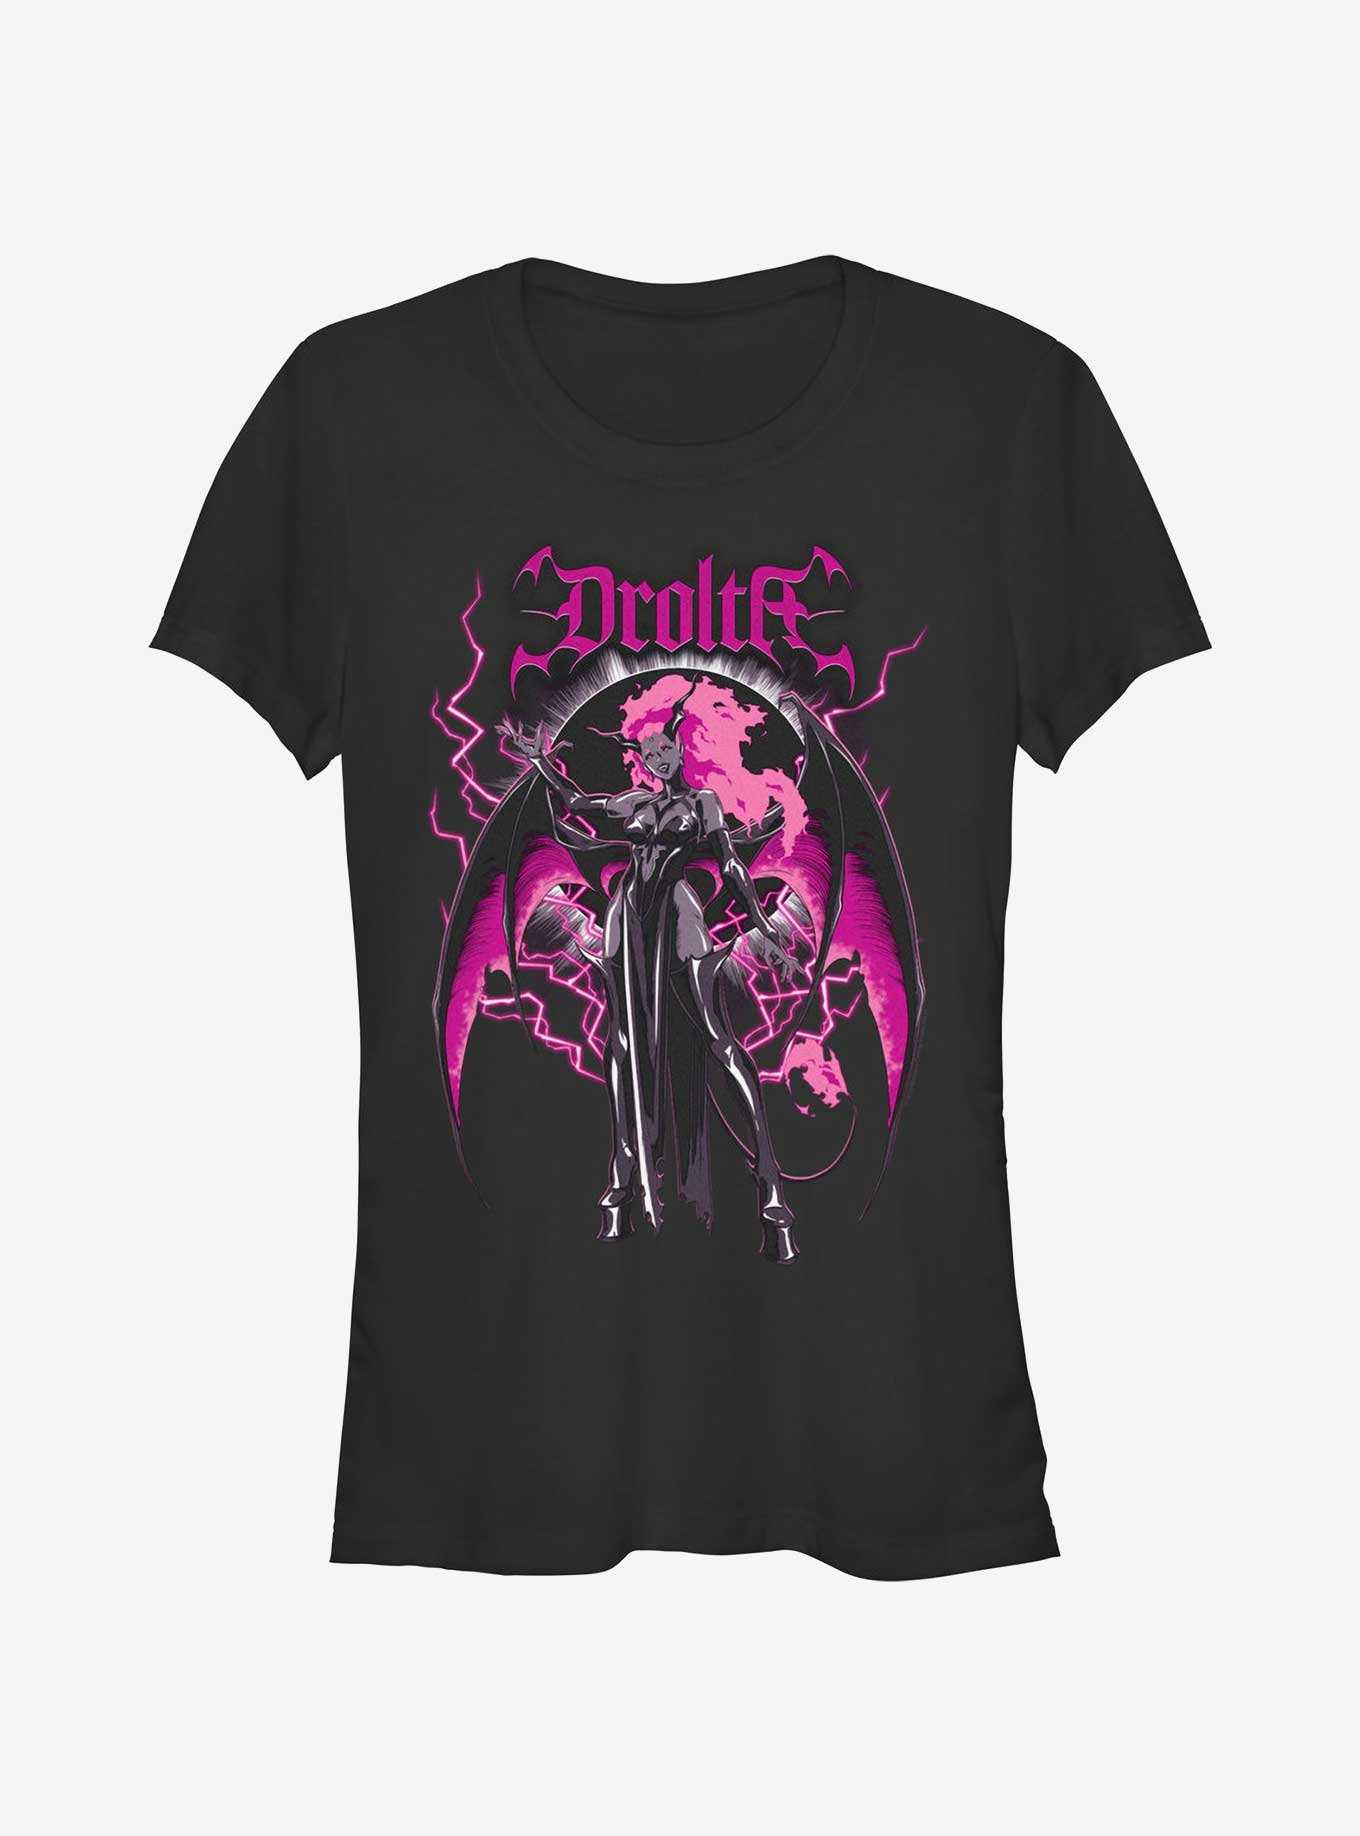 Castlevania: Nocturne Drolta Full Body Girls T-Shirt, , hi-res